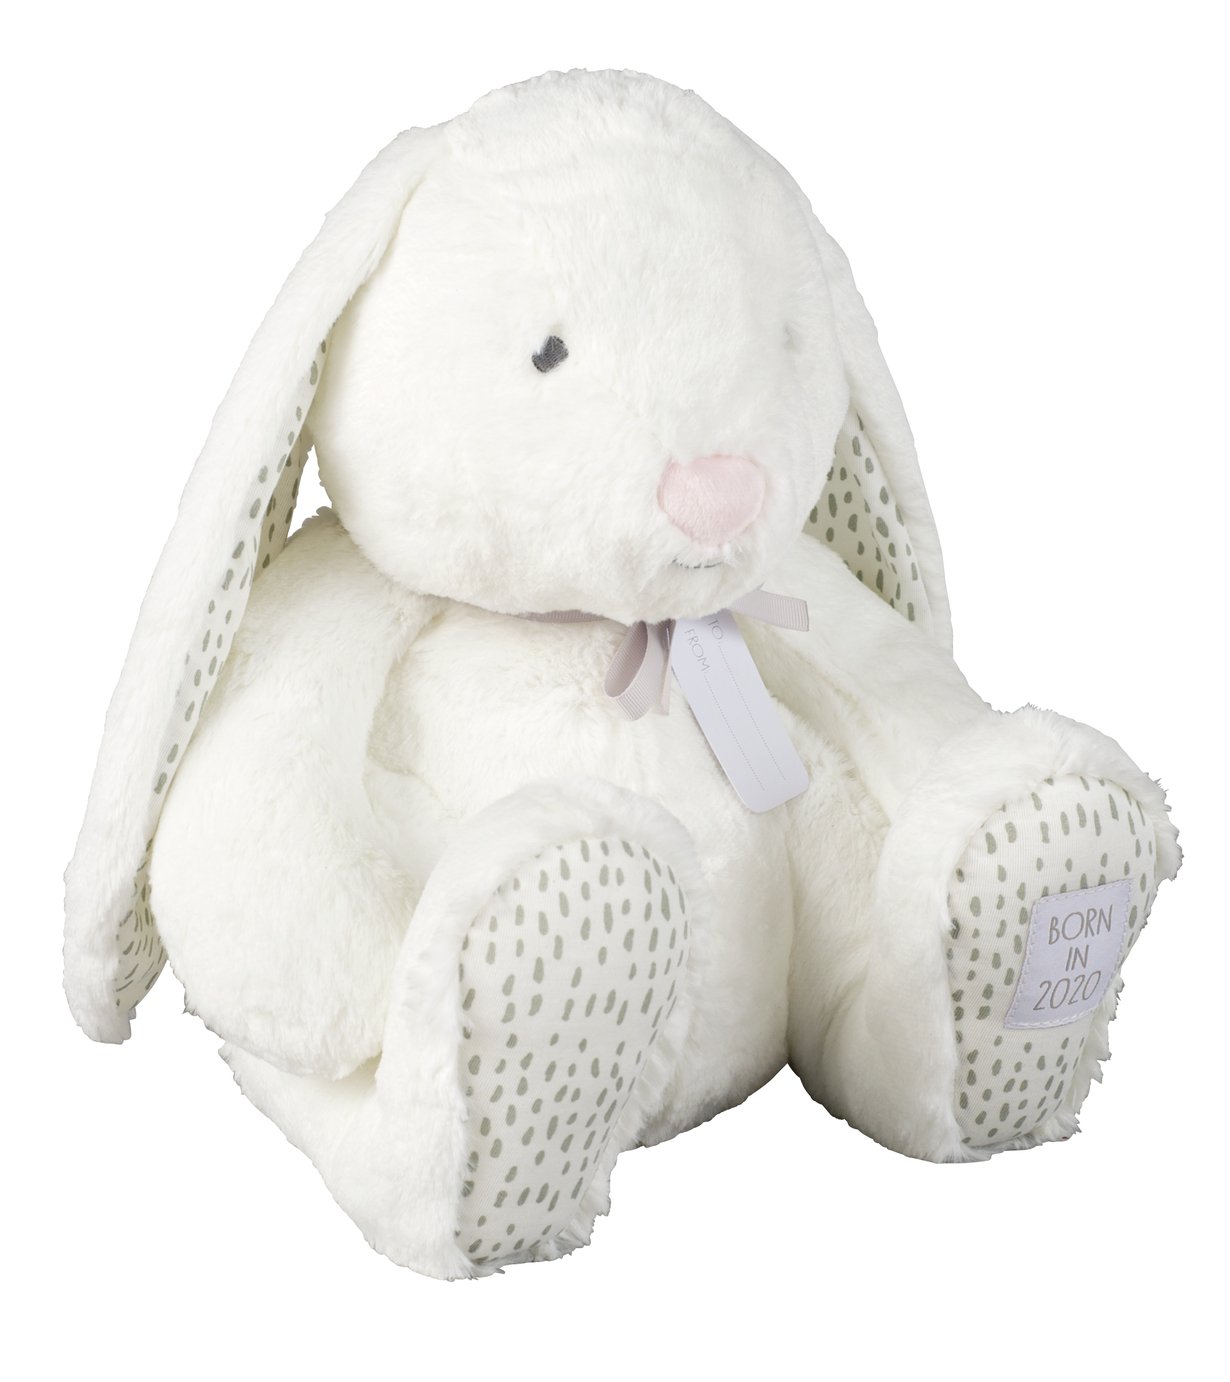 my first bunny stuffed animal